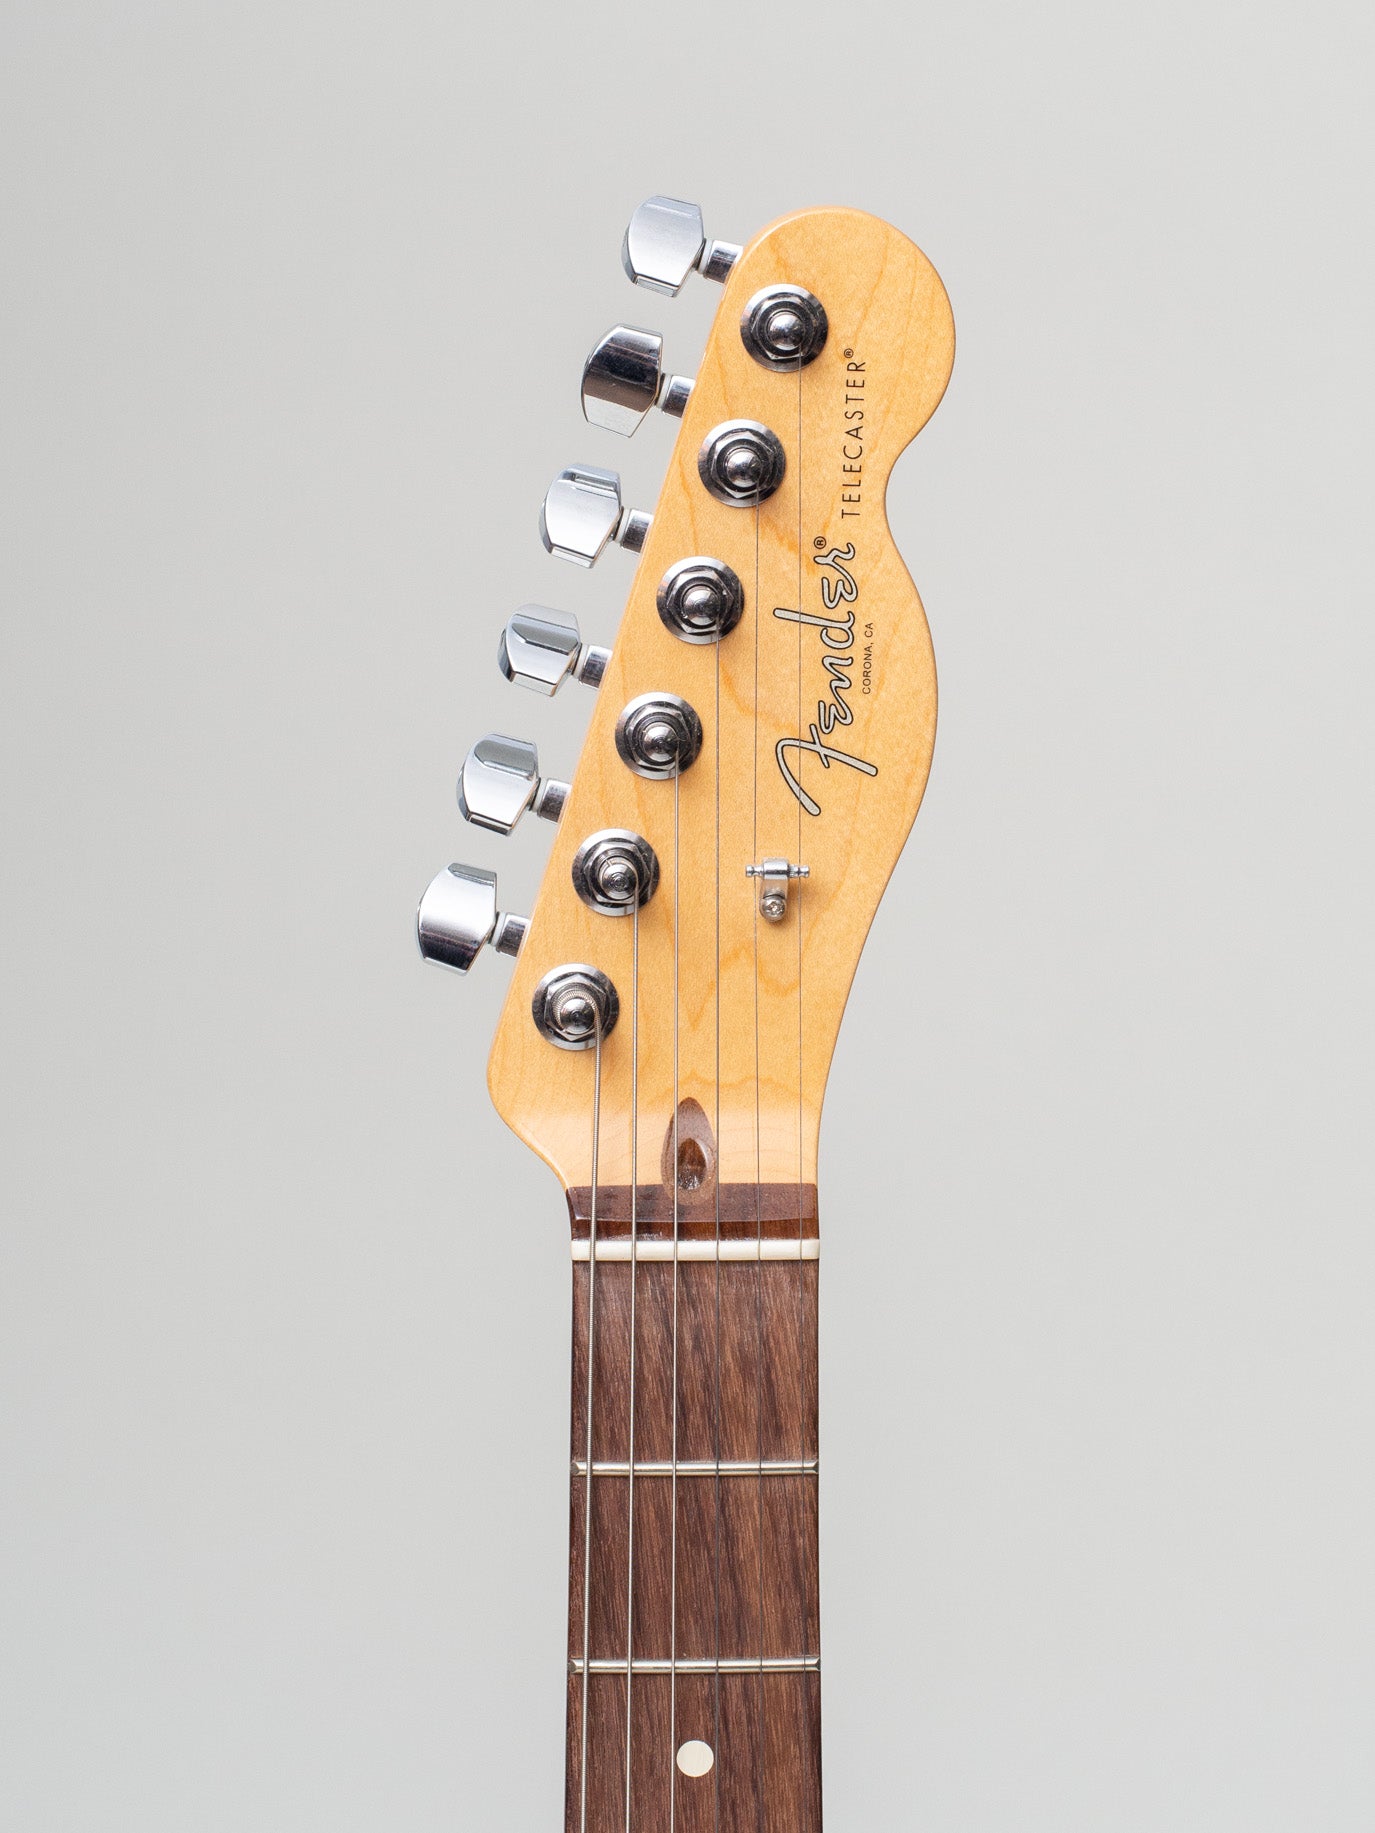 2016 Fender American Professional Telecaster